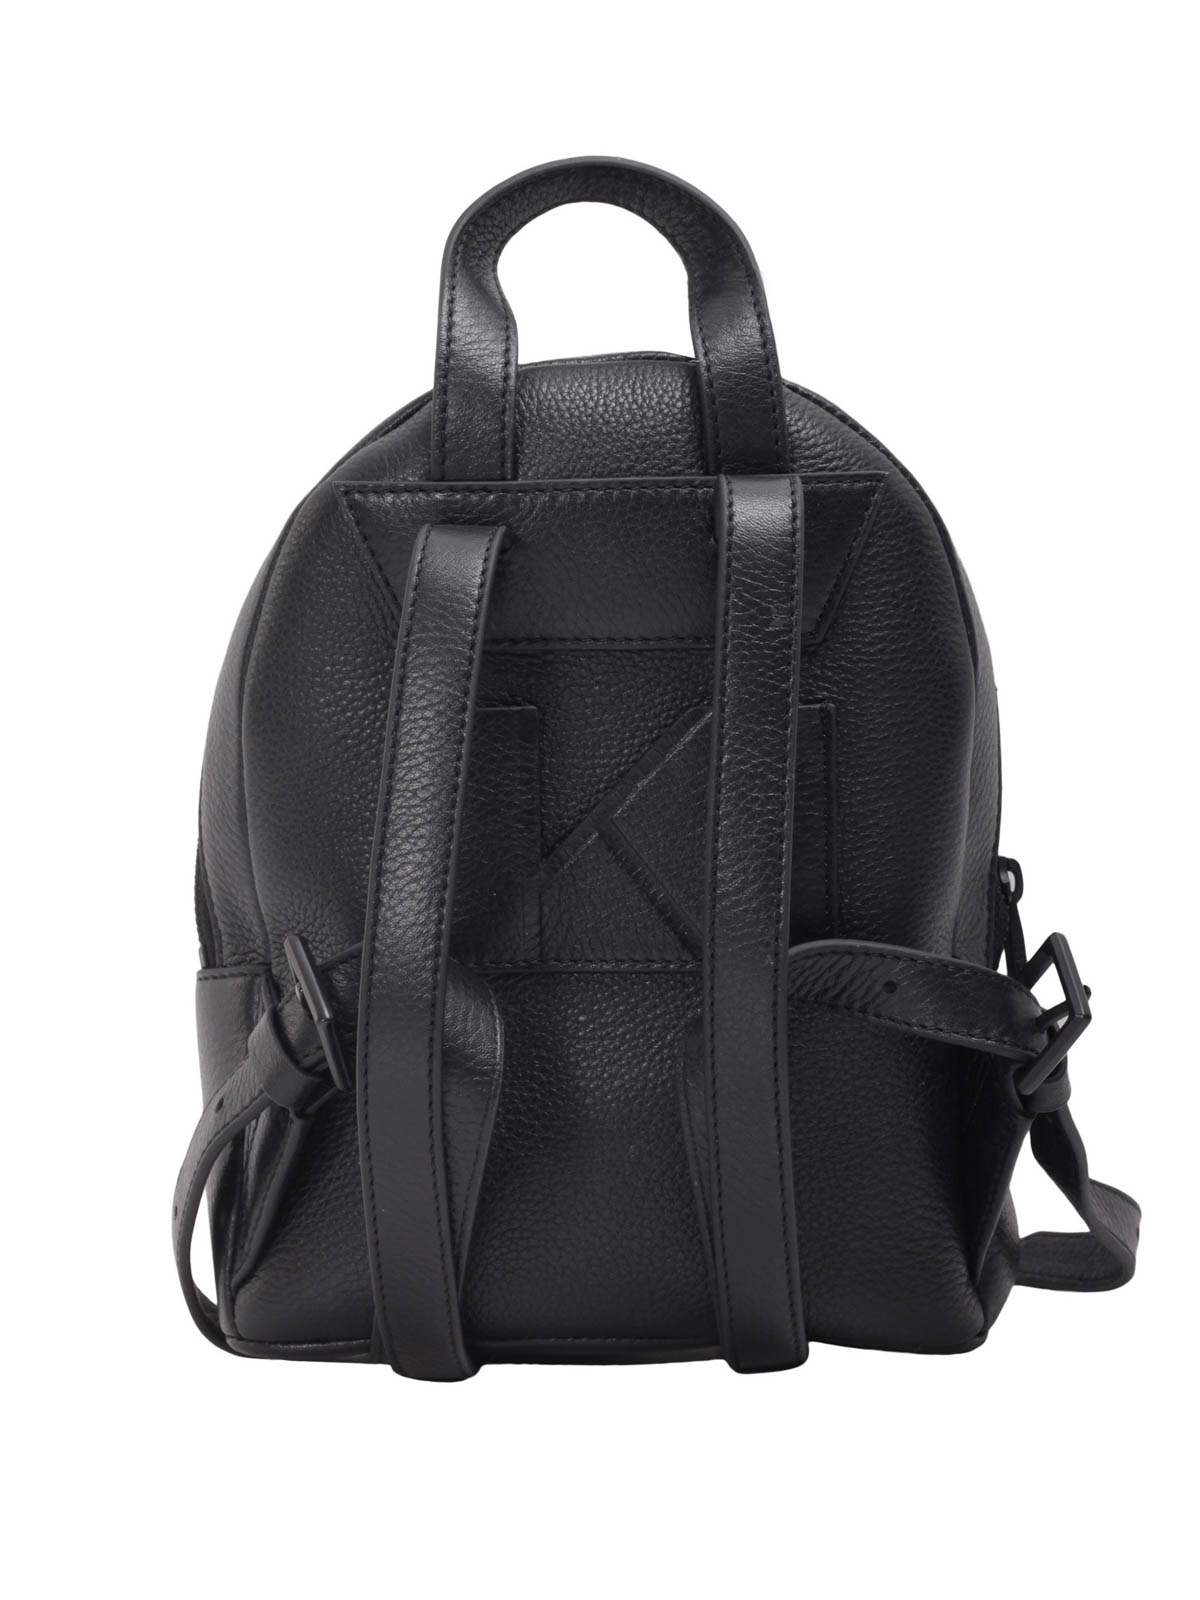 KENDALL + KYLIE Small Zipper Black Backpack